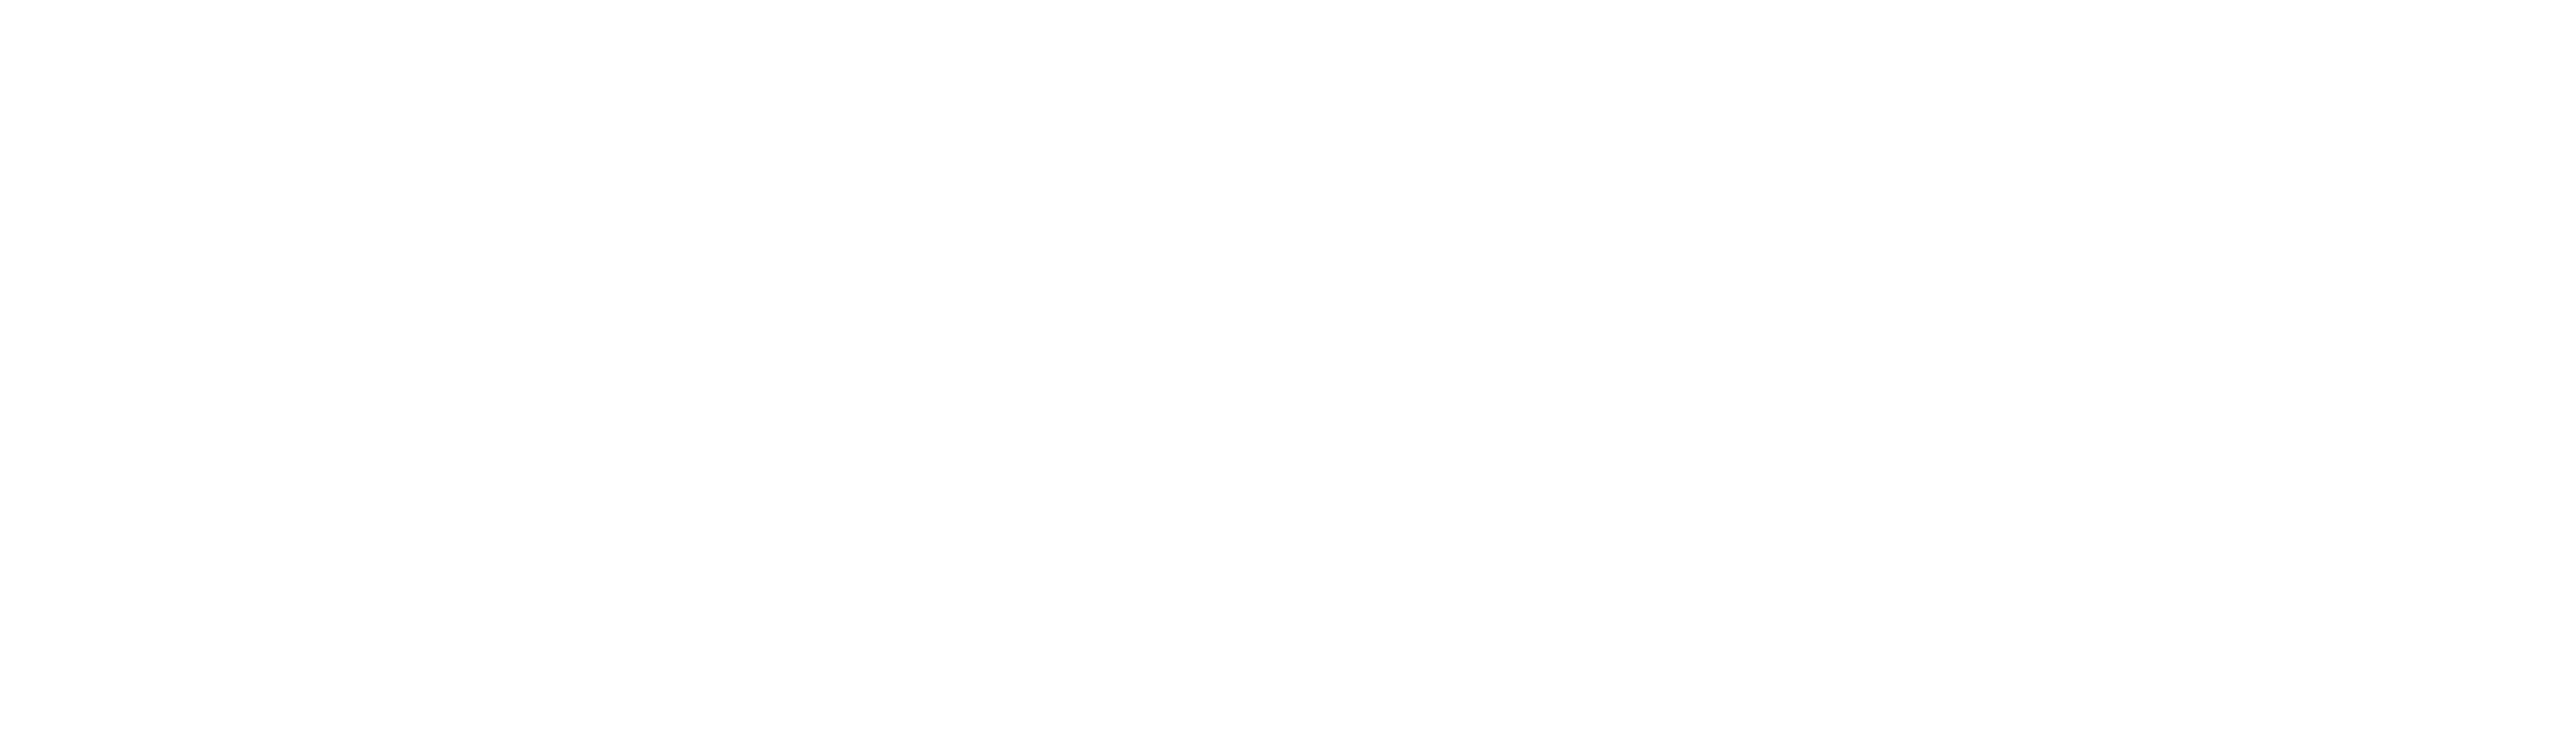 Imagine Landscaping Inc